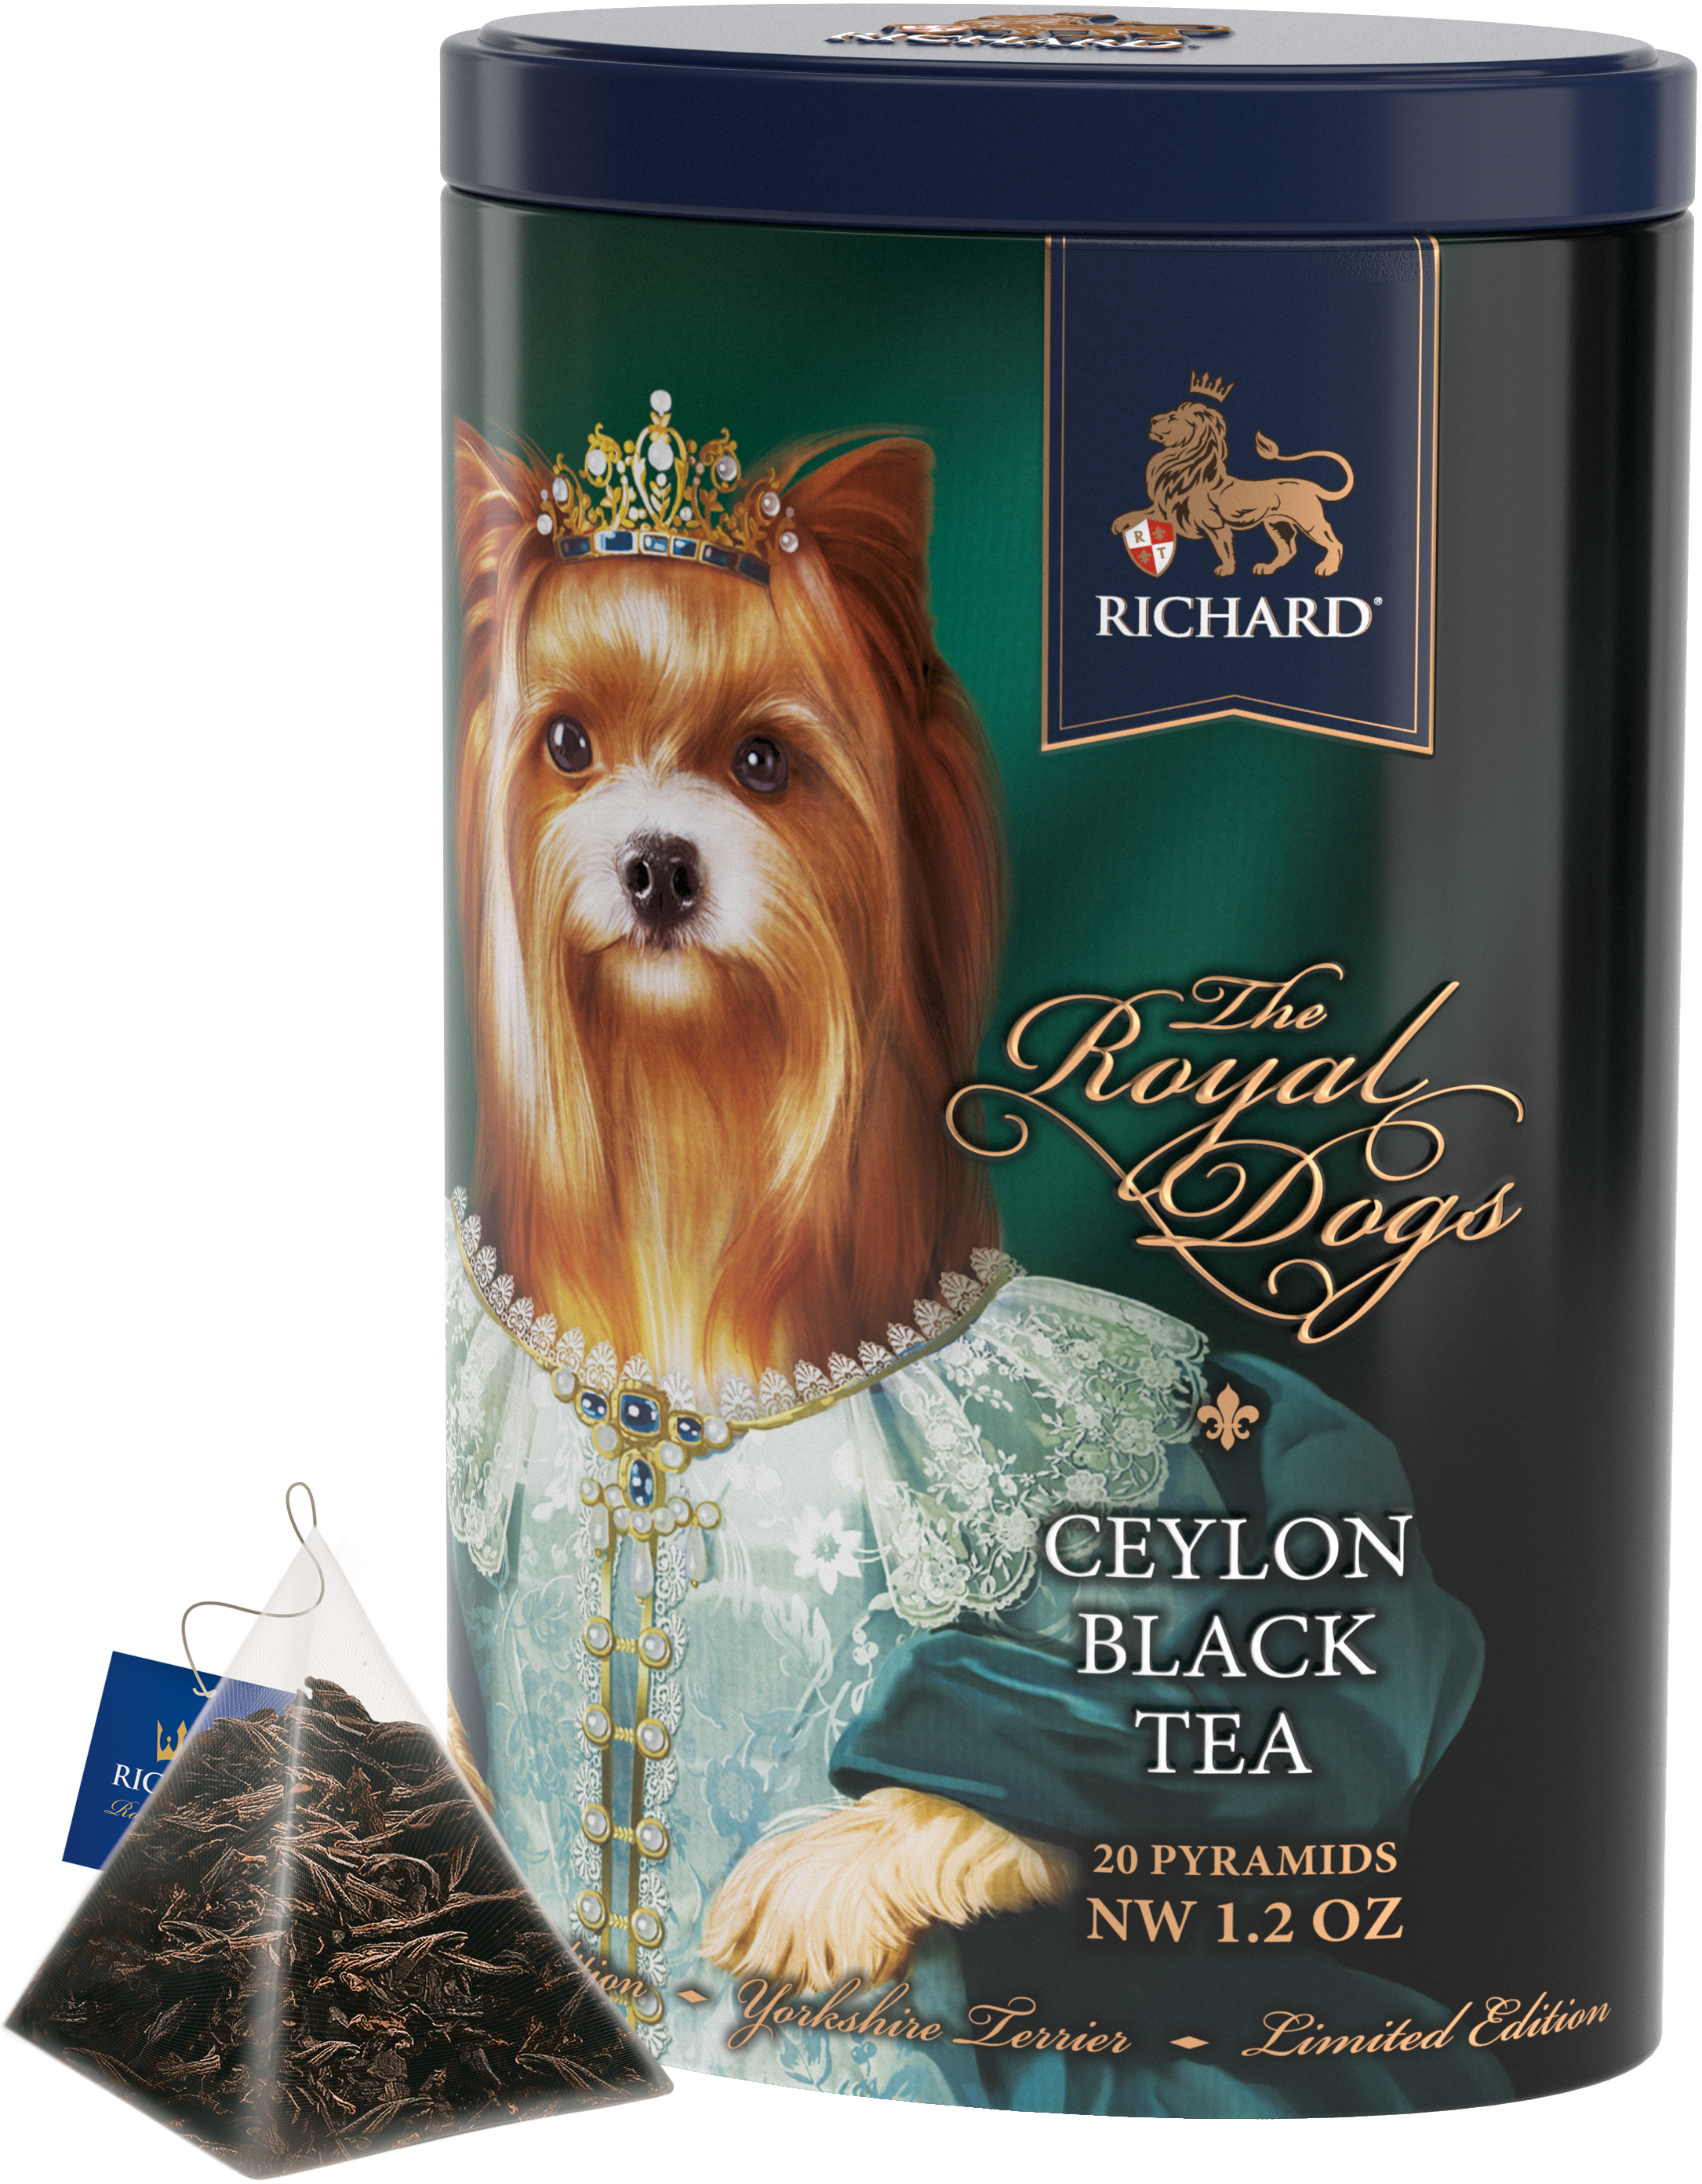 Richard Tea "Royal Dogs. York", Classic black tea in pyramids, 20 pyramids, 34g